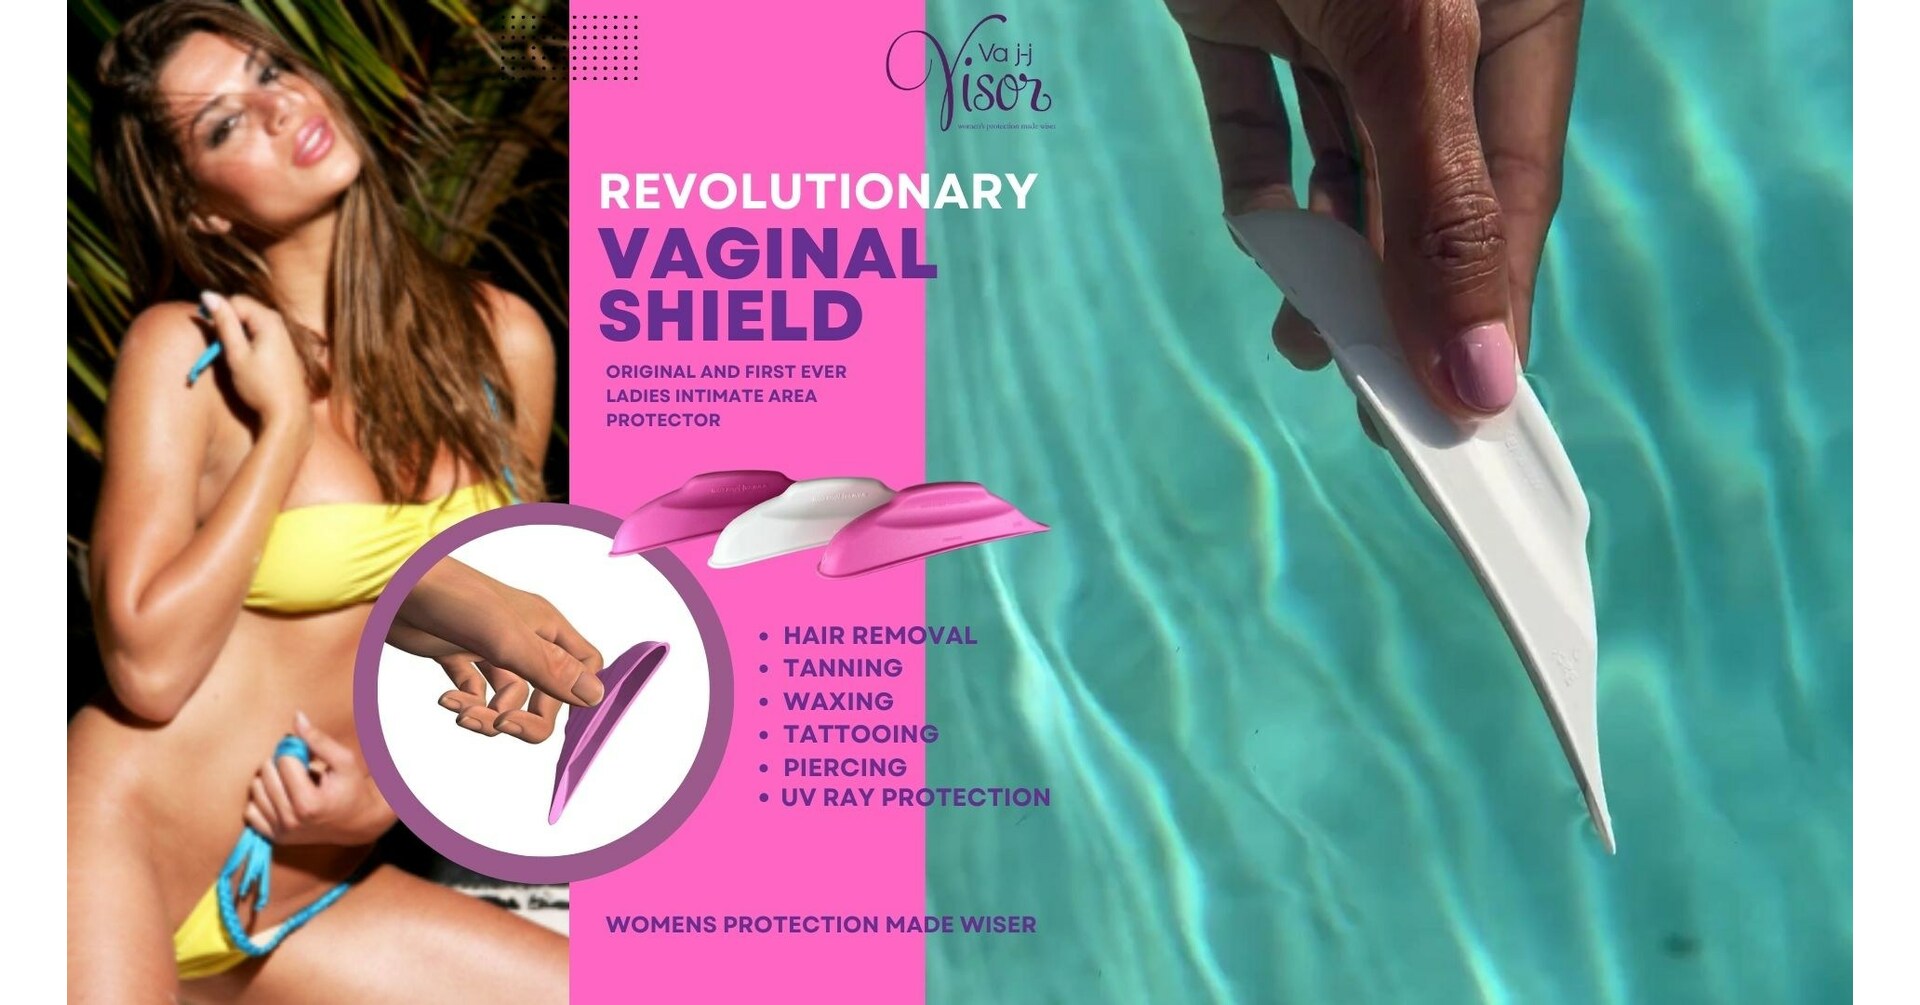 Introducing the Original Va j-j Visor, Ladies Intimate Area Shield - Made  In The USA